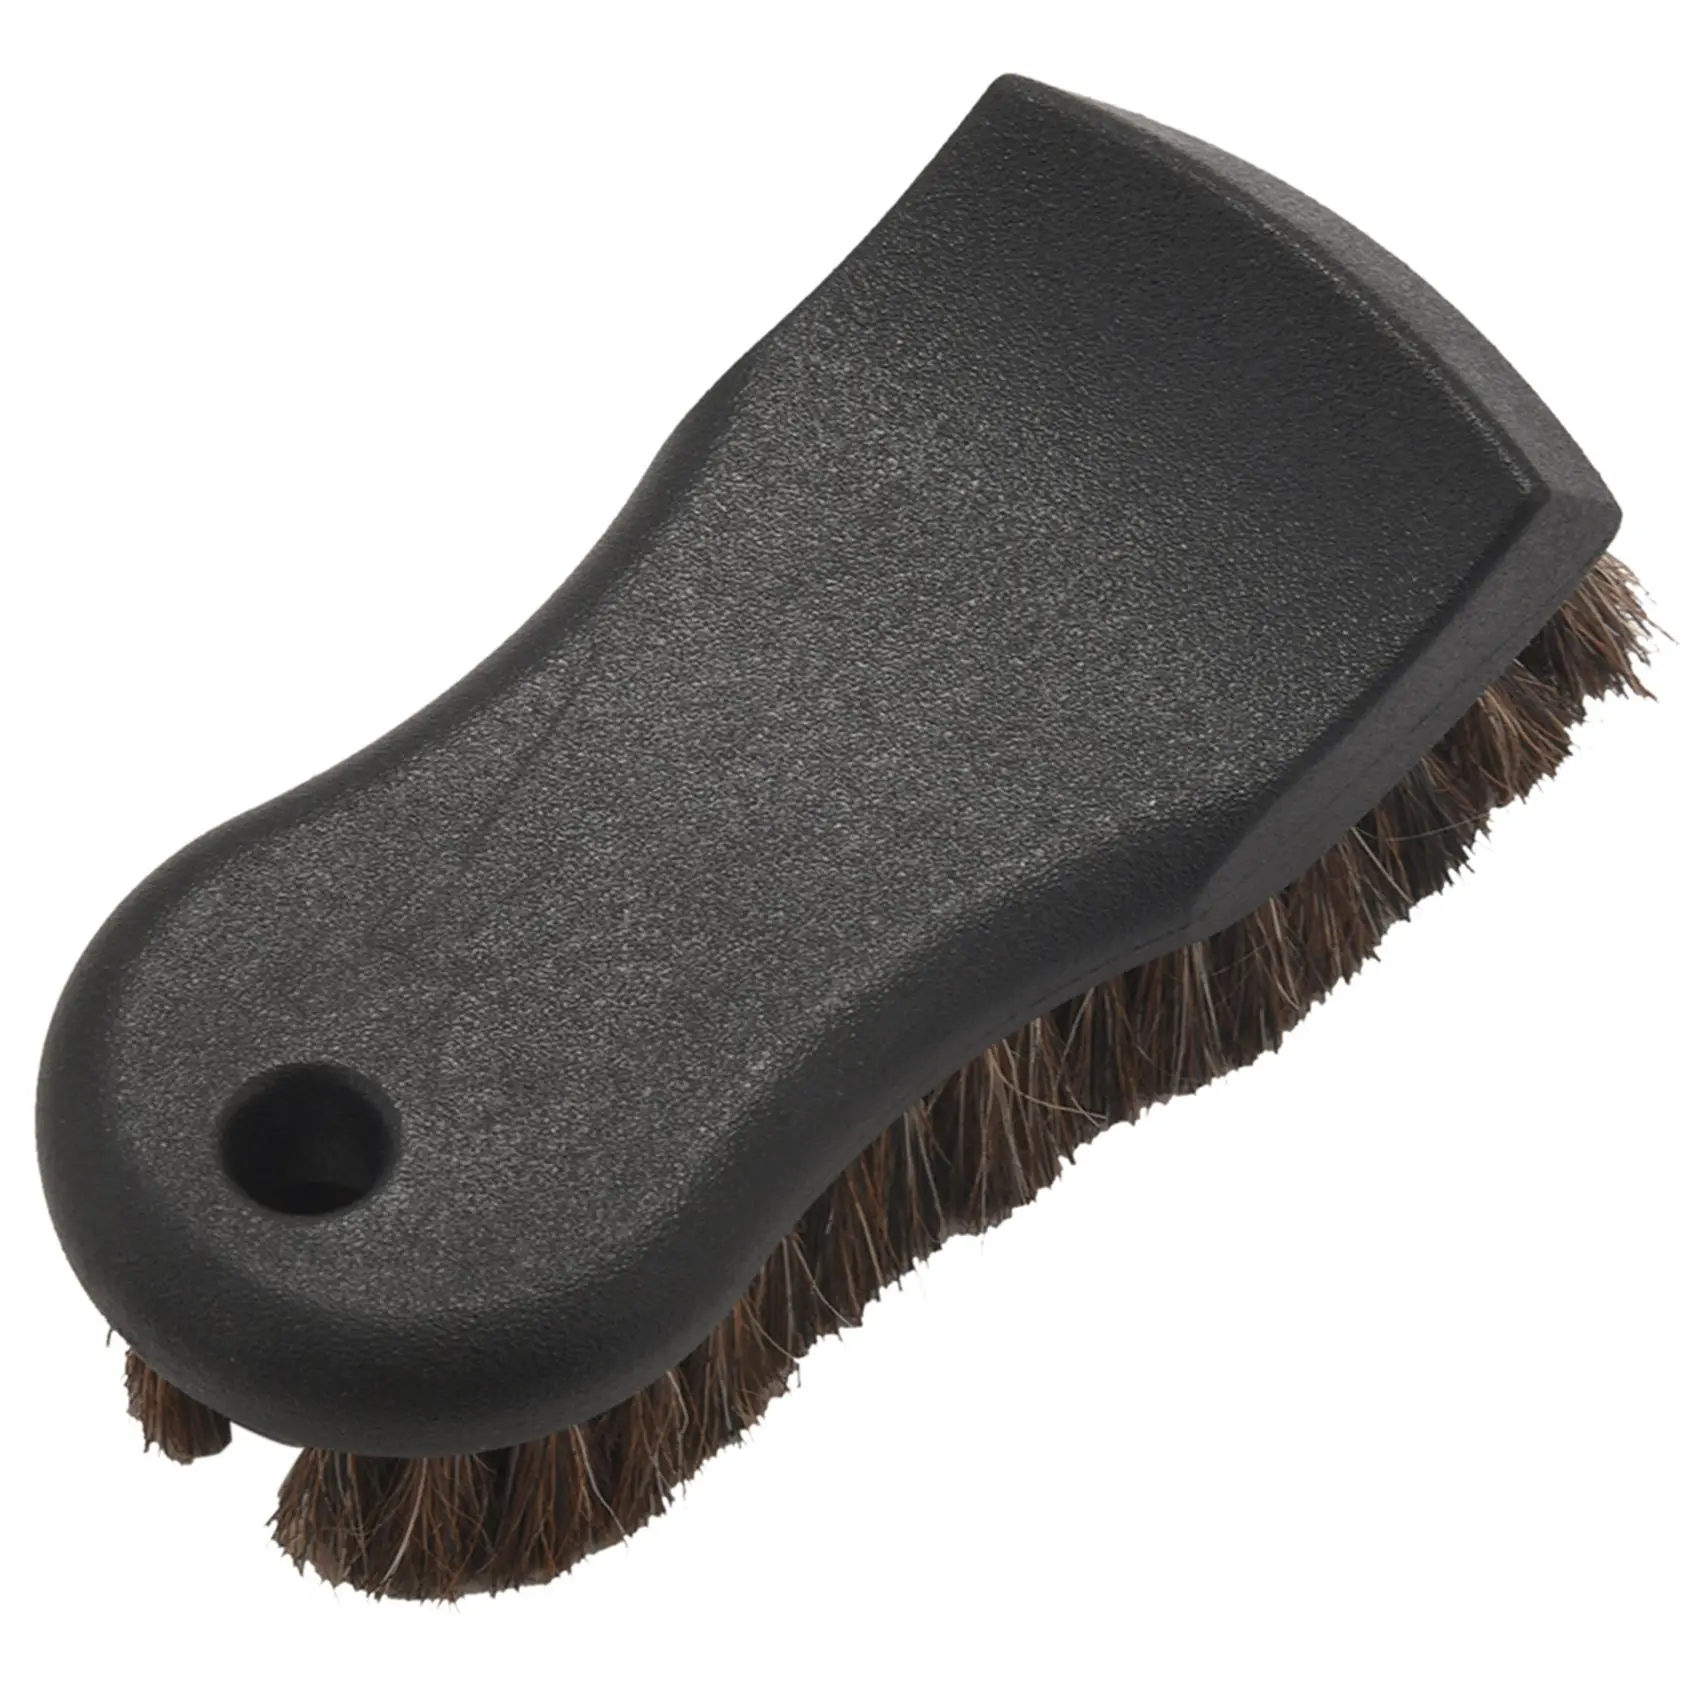 

Car Cleaning Brush, Soft Horse Hair Detailing Brush Non-Slip Handle Wash Vehicle Brush for Rim Chassis, Radiator Grille